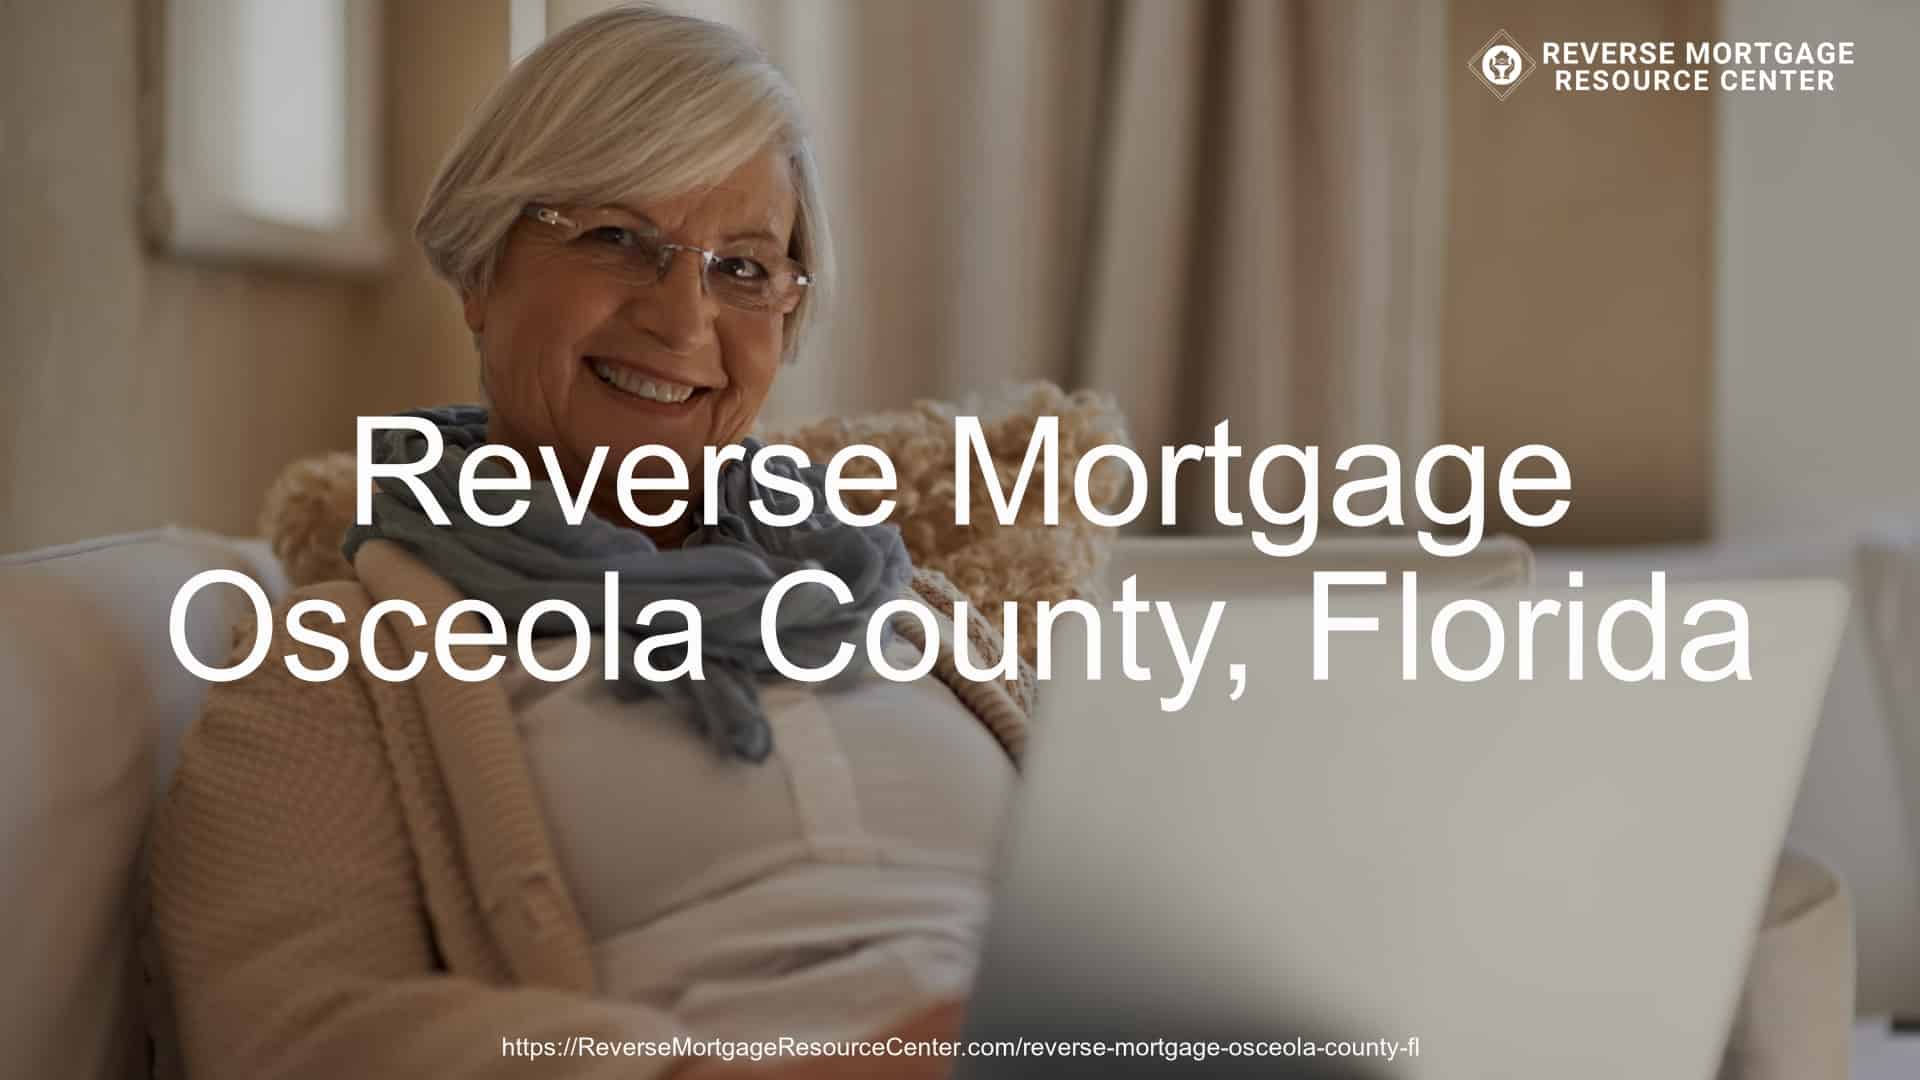 Reverse Mortgage Loans in Osceola County Florida